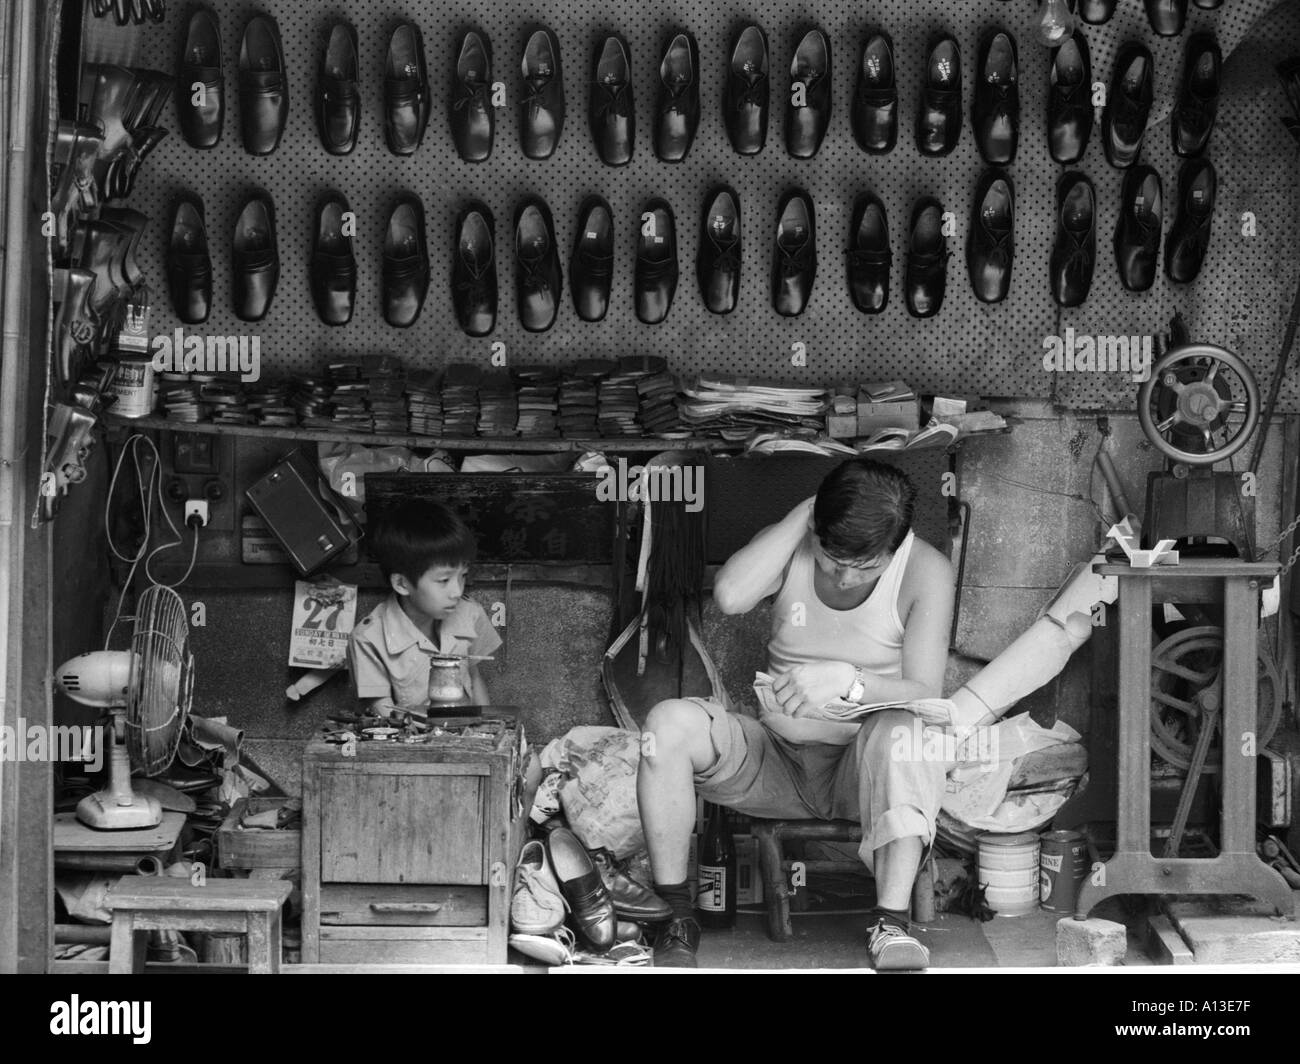 Un carico di calzolai- stili di vita di fuga nel Quartiere Occidentale di Hong Kong Foto Stock